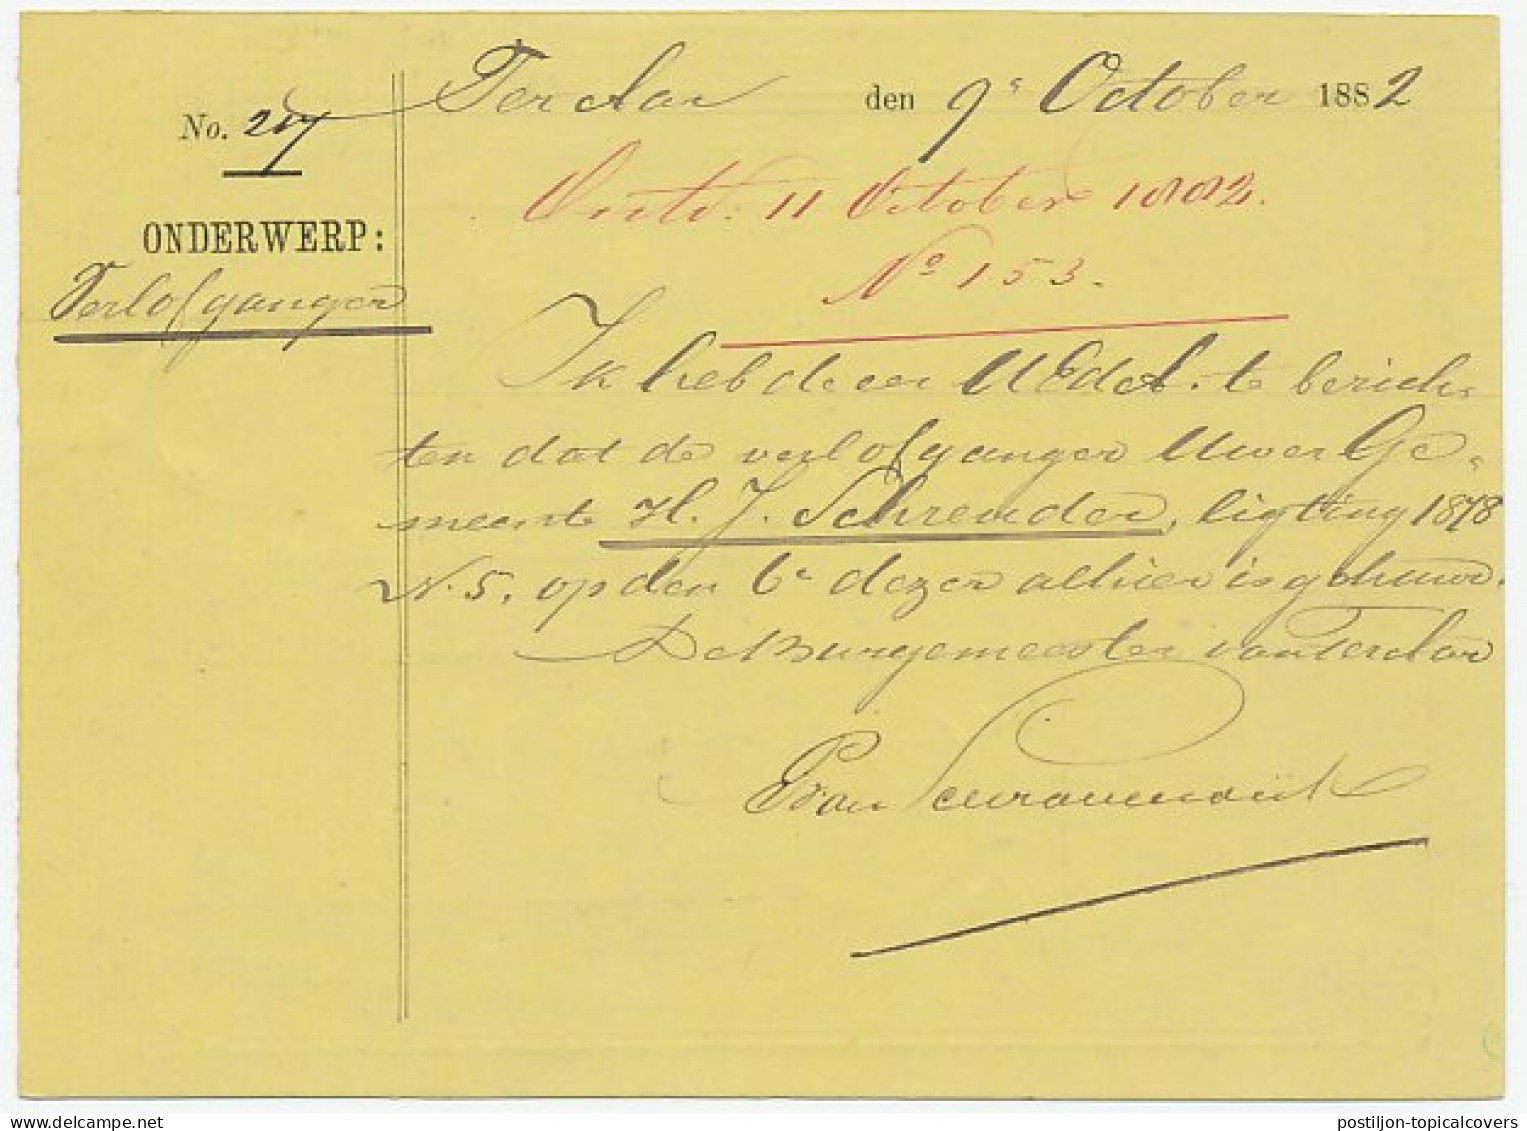 Naamstempel Rhynsaterwoude 1882 - Storia Postale